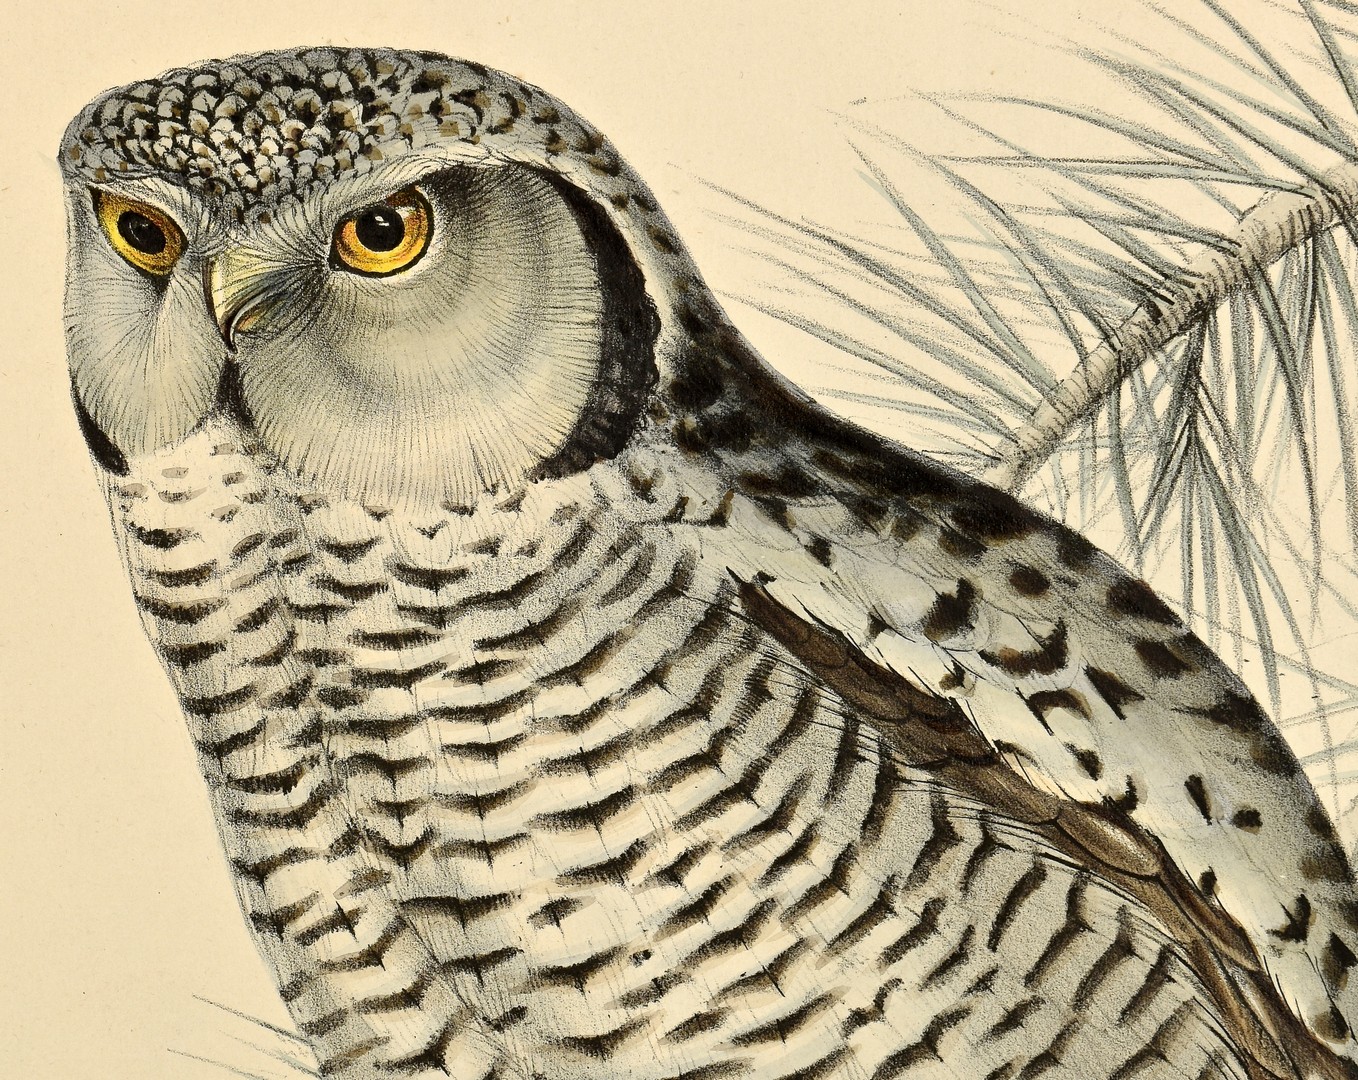 Lot 236: 3 Bird Prints, Gould, Audubon and Wilson.